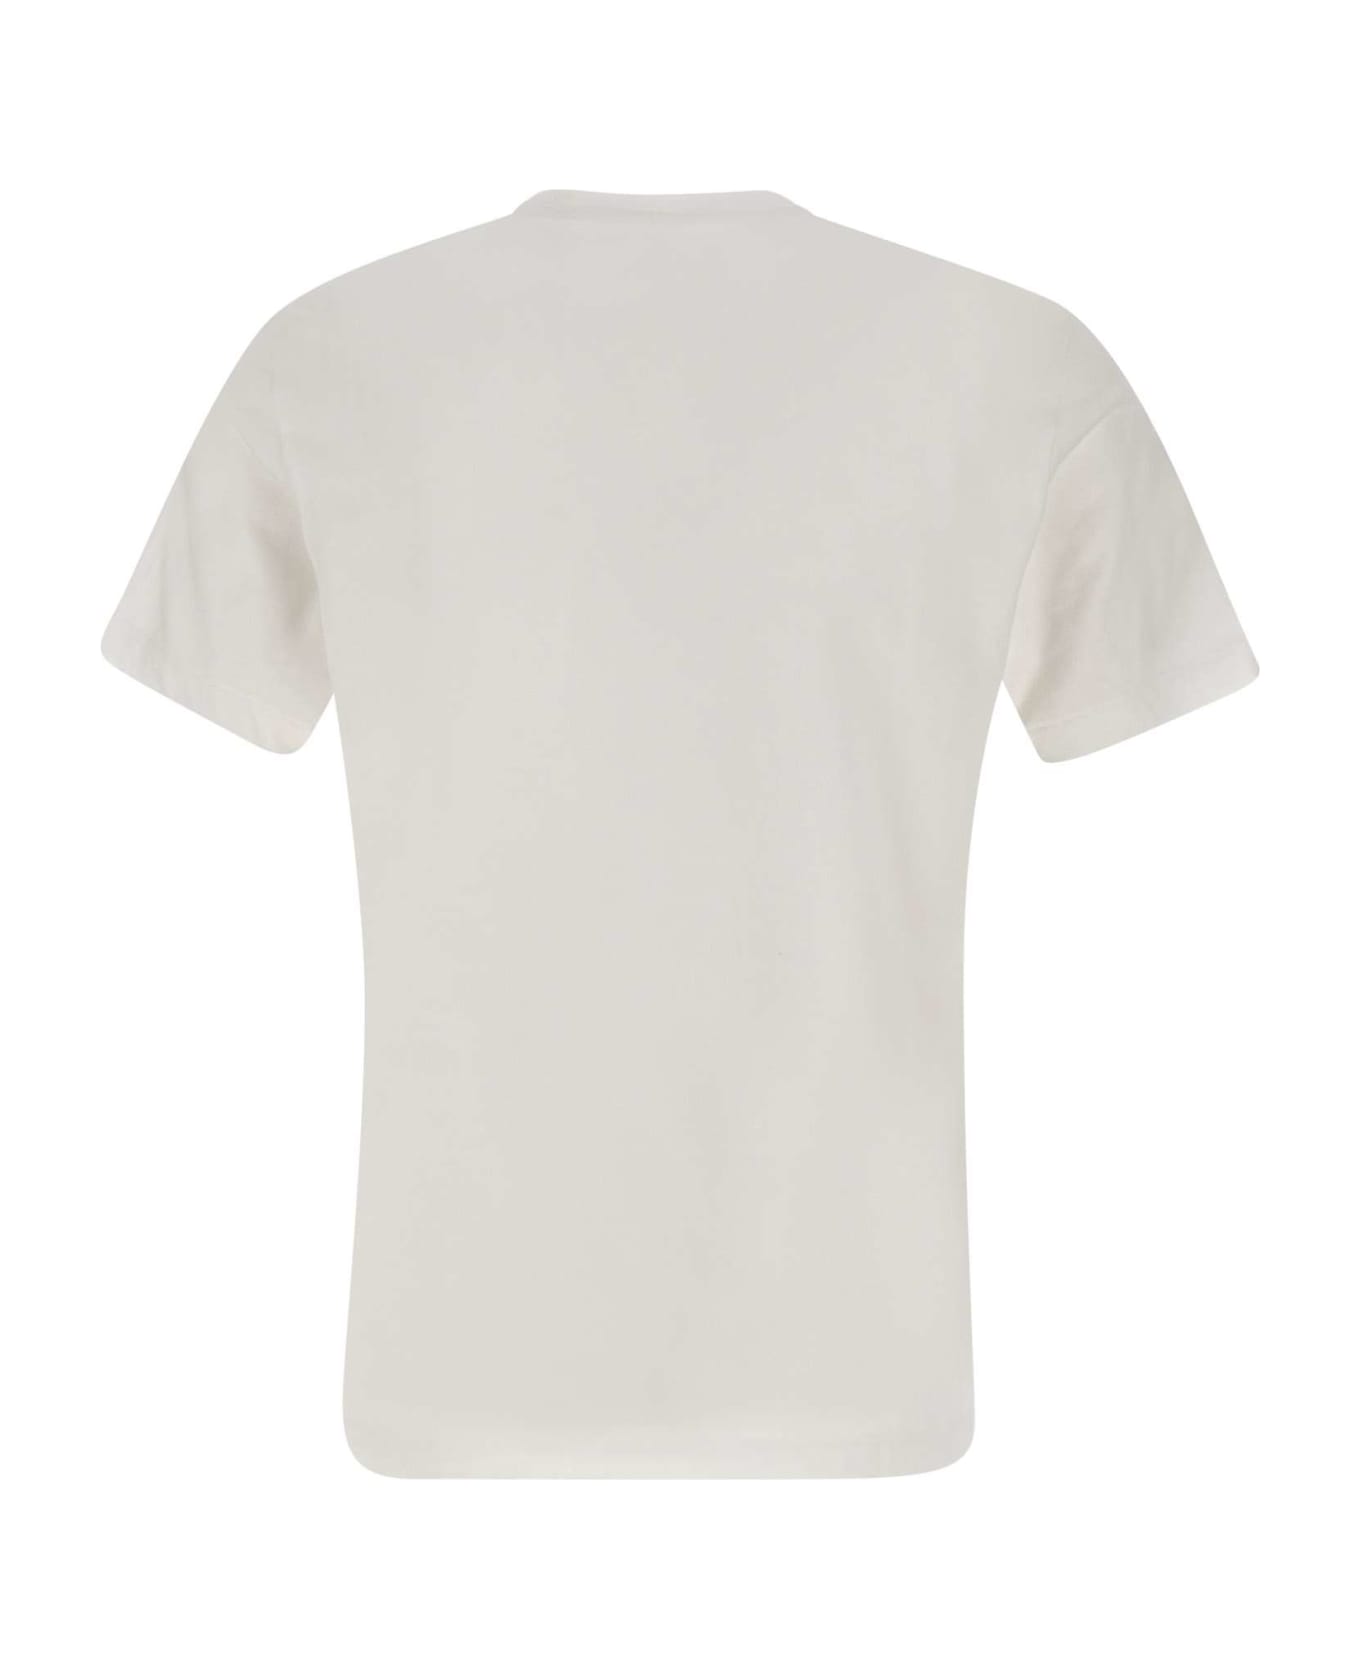 Polo Ralph Lauren "msw" Cotton T-shirt - WHITE シャツ